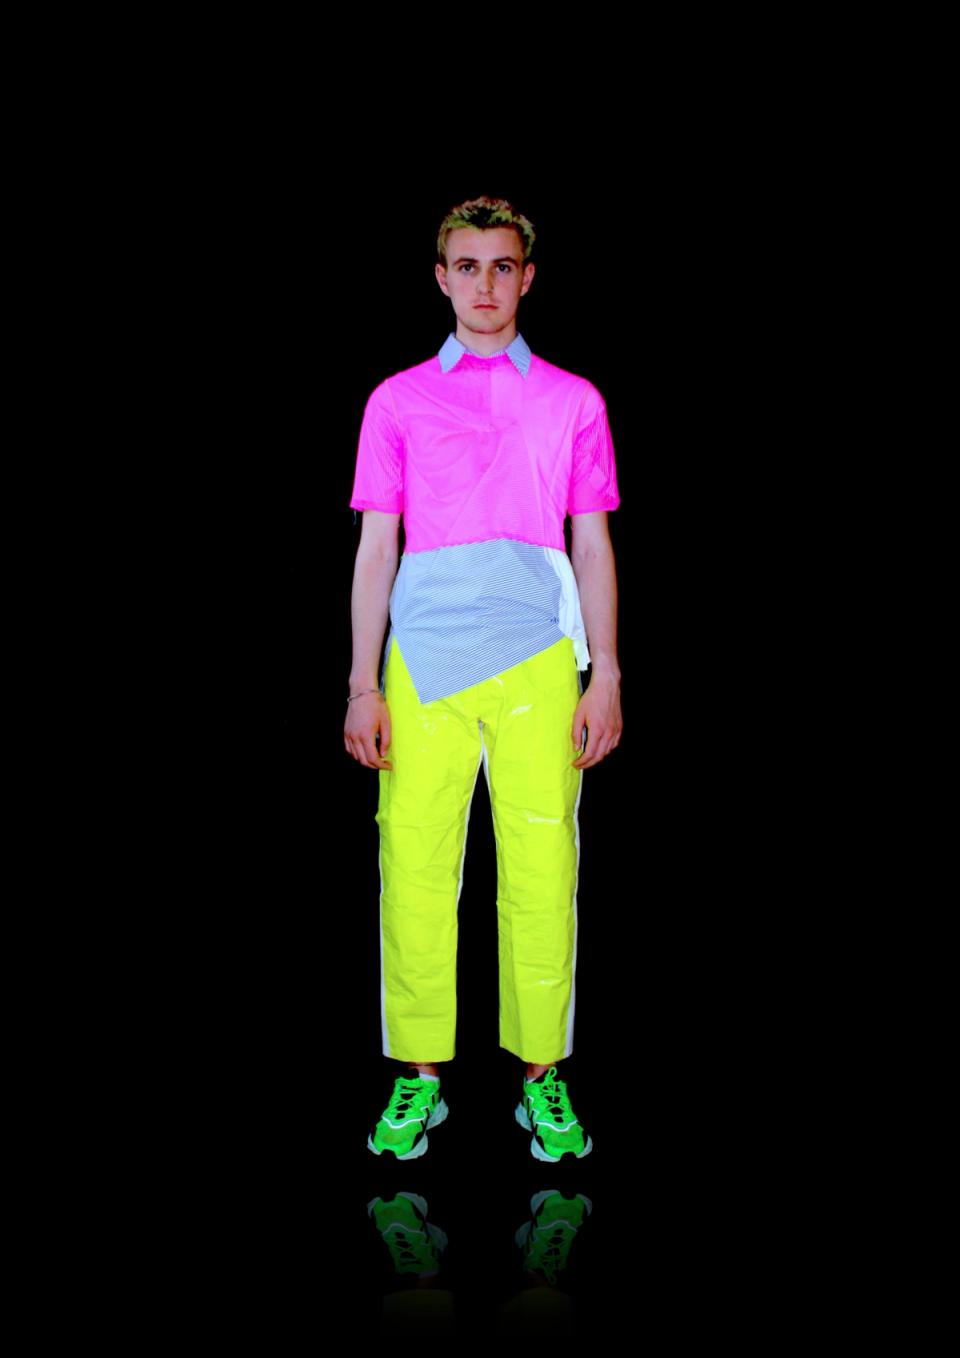 Jake Treddenick's For the love of neon